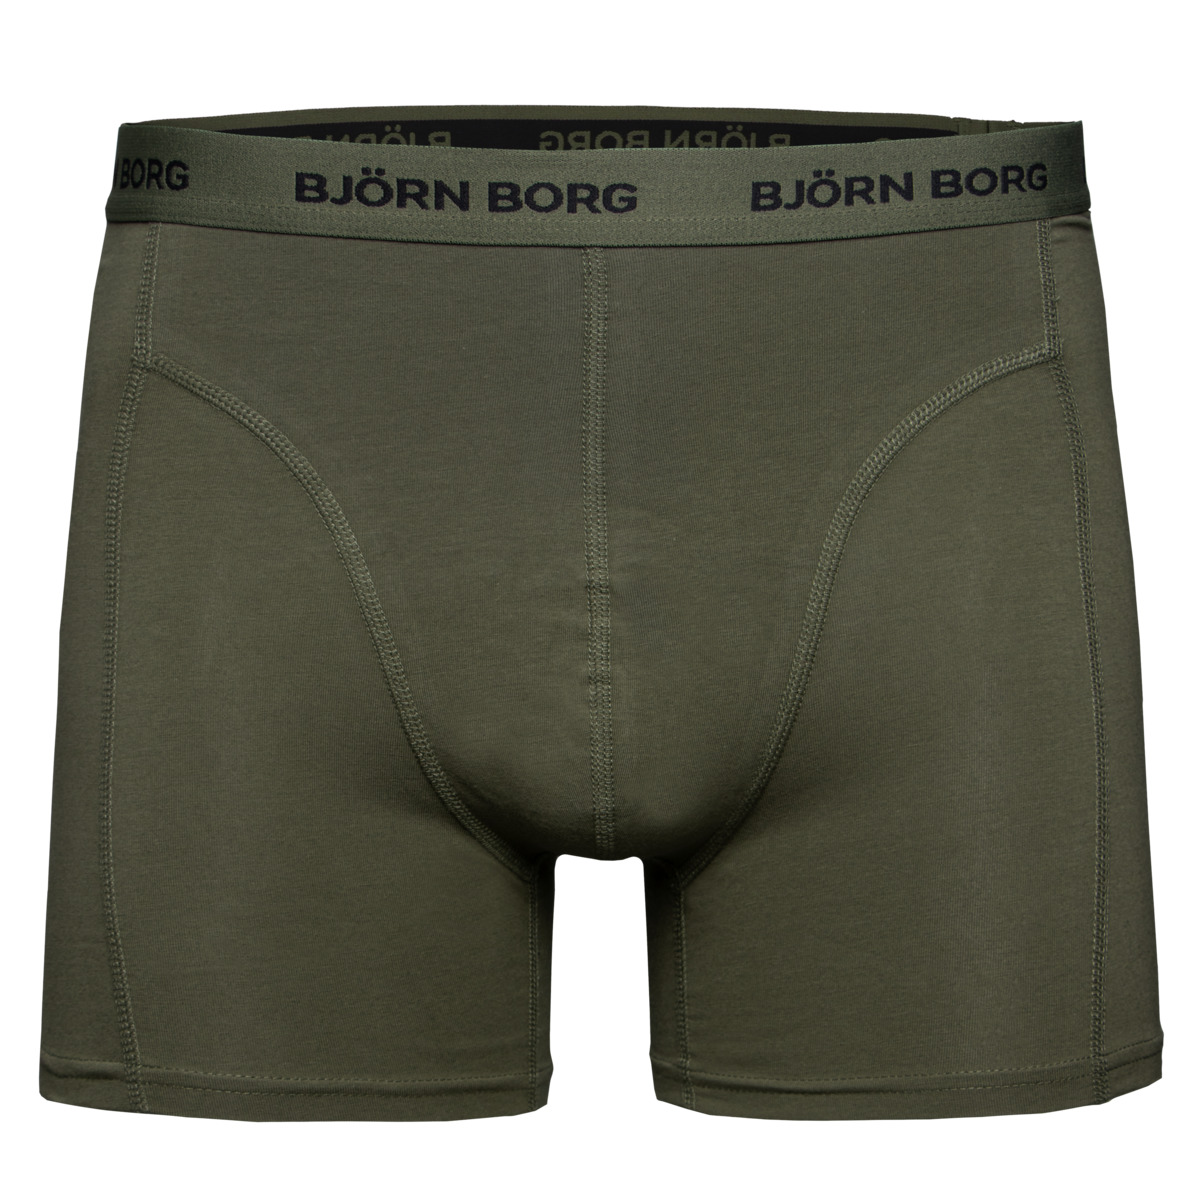 Björn Borg Cotton Stretch Boxer 5er Pack Boxershorts multicolor